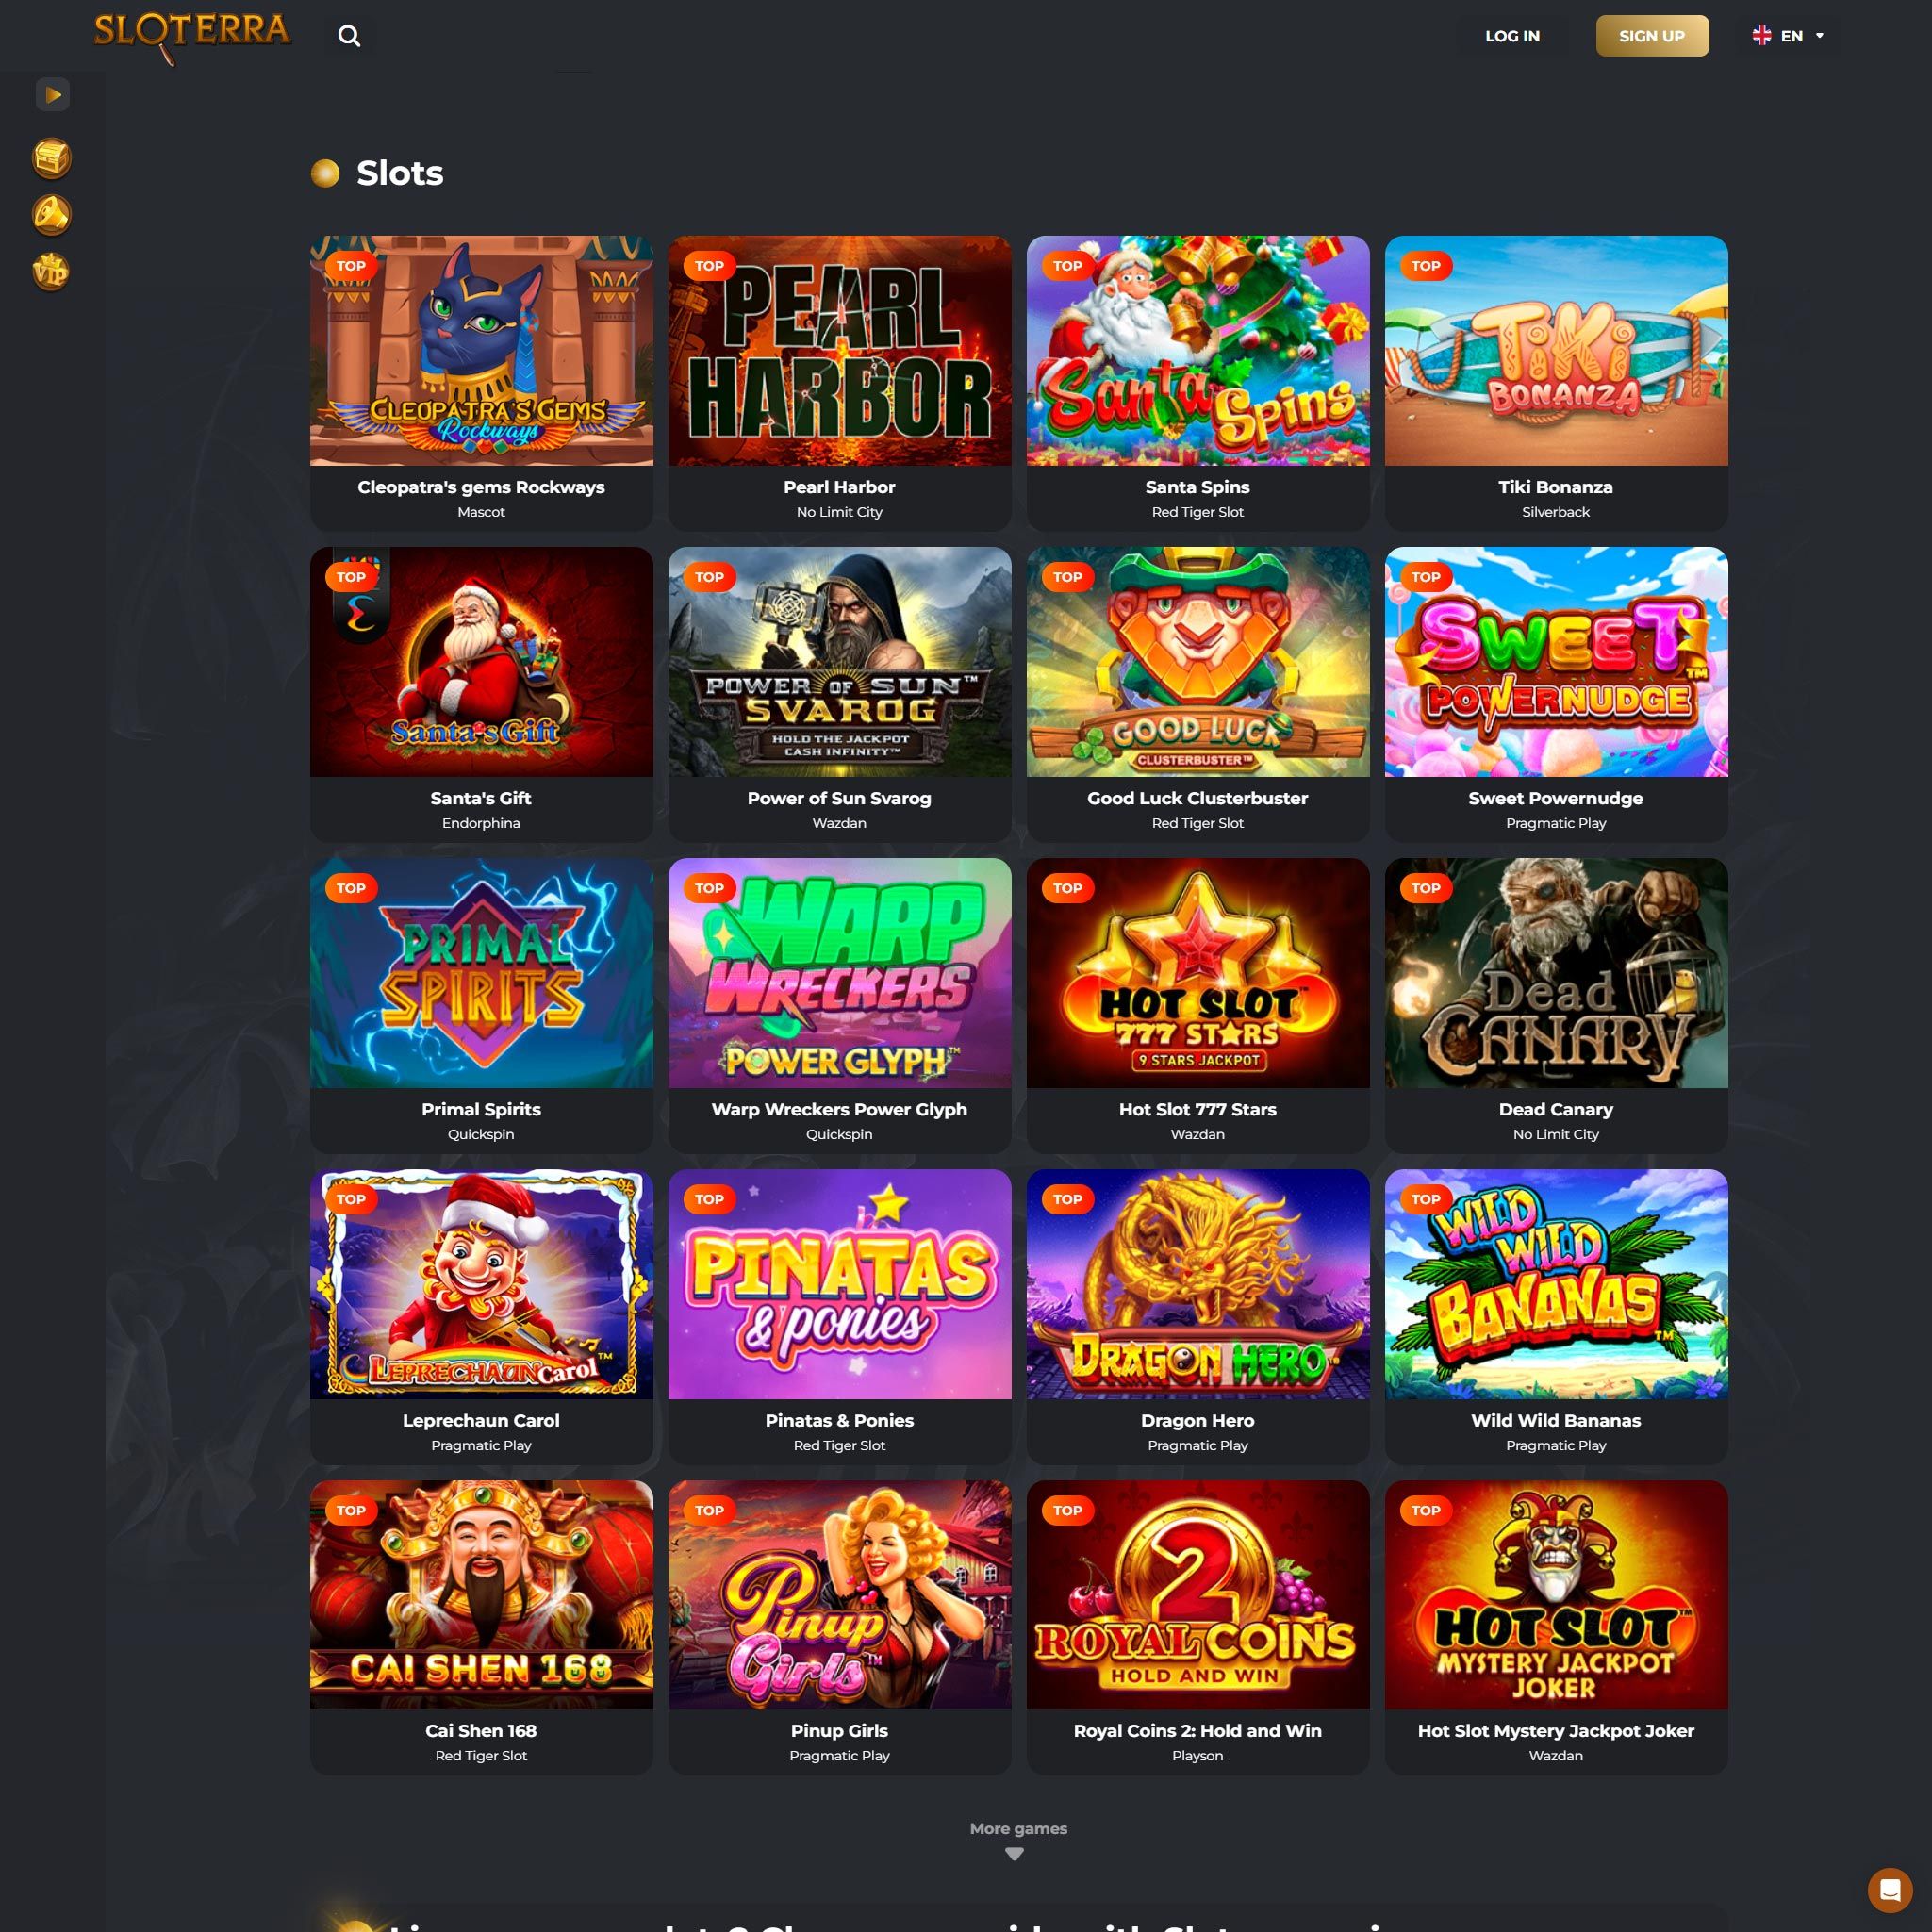 Sloterra Casino full games catalogue